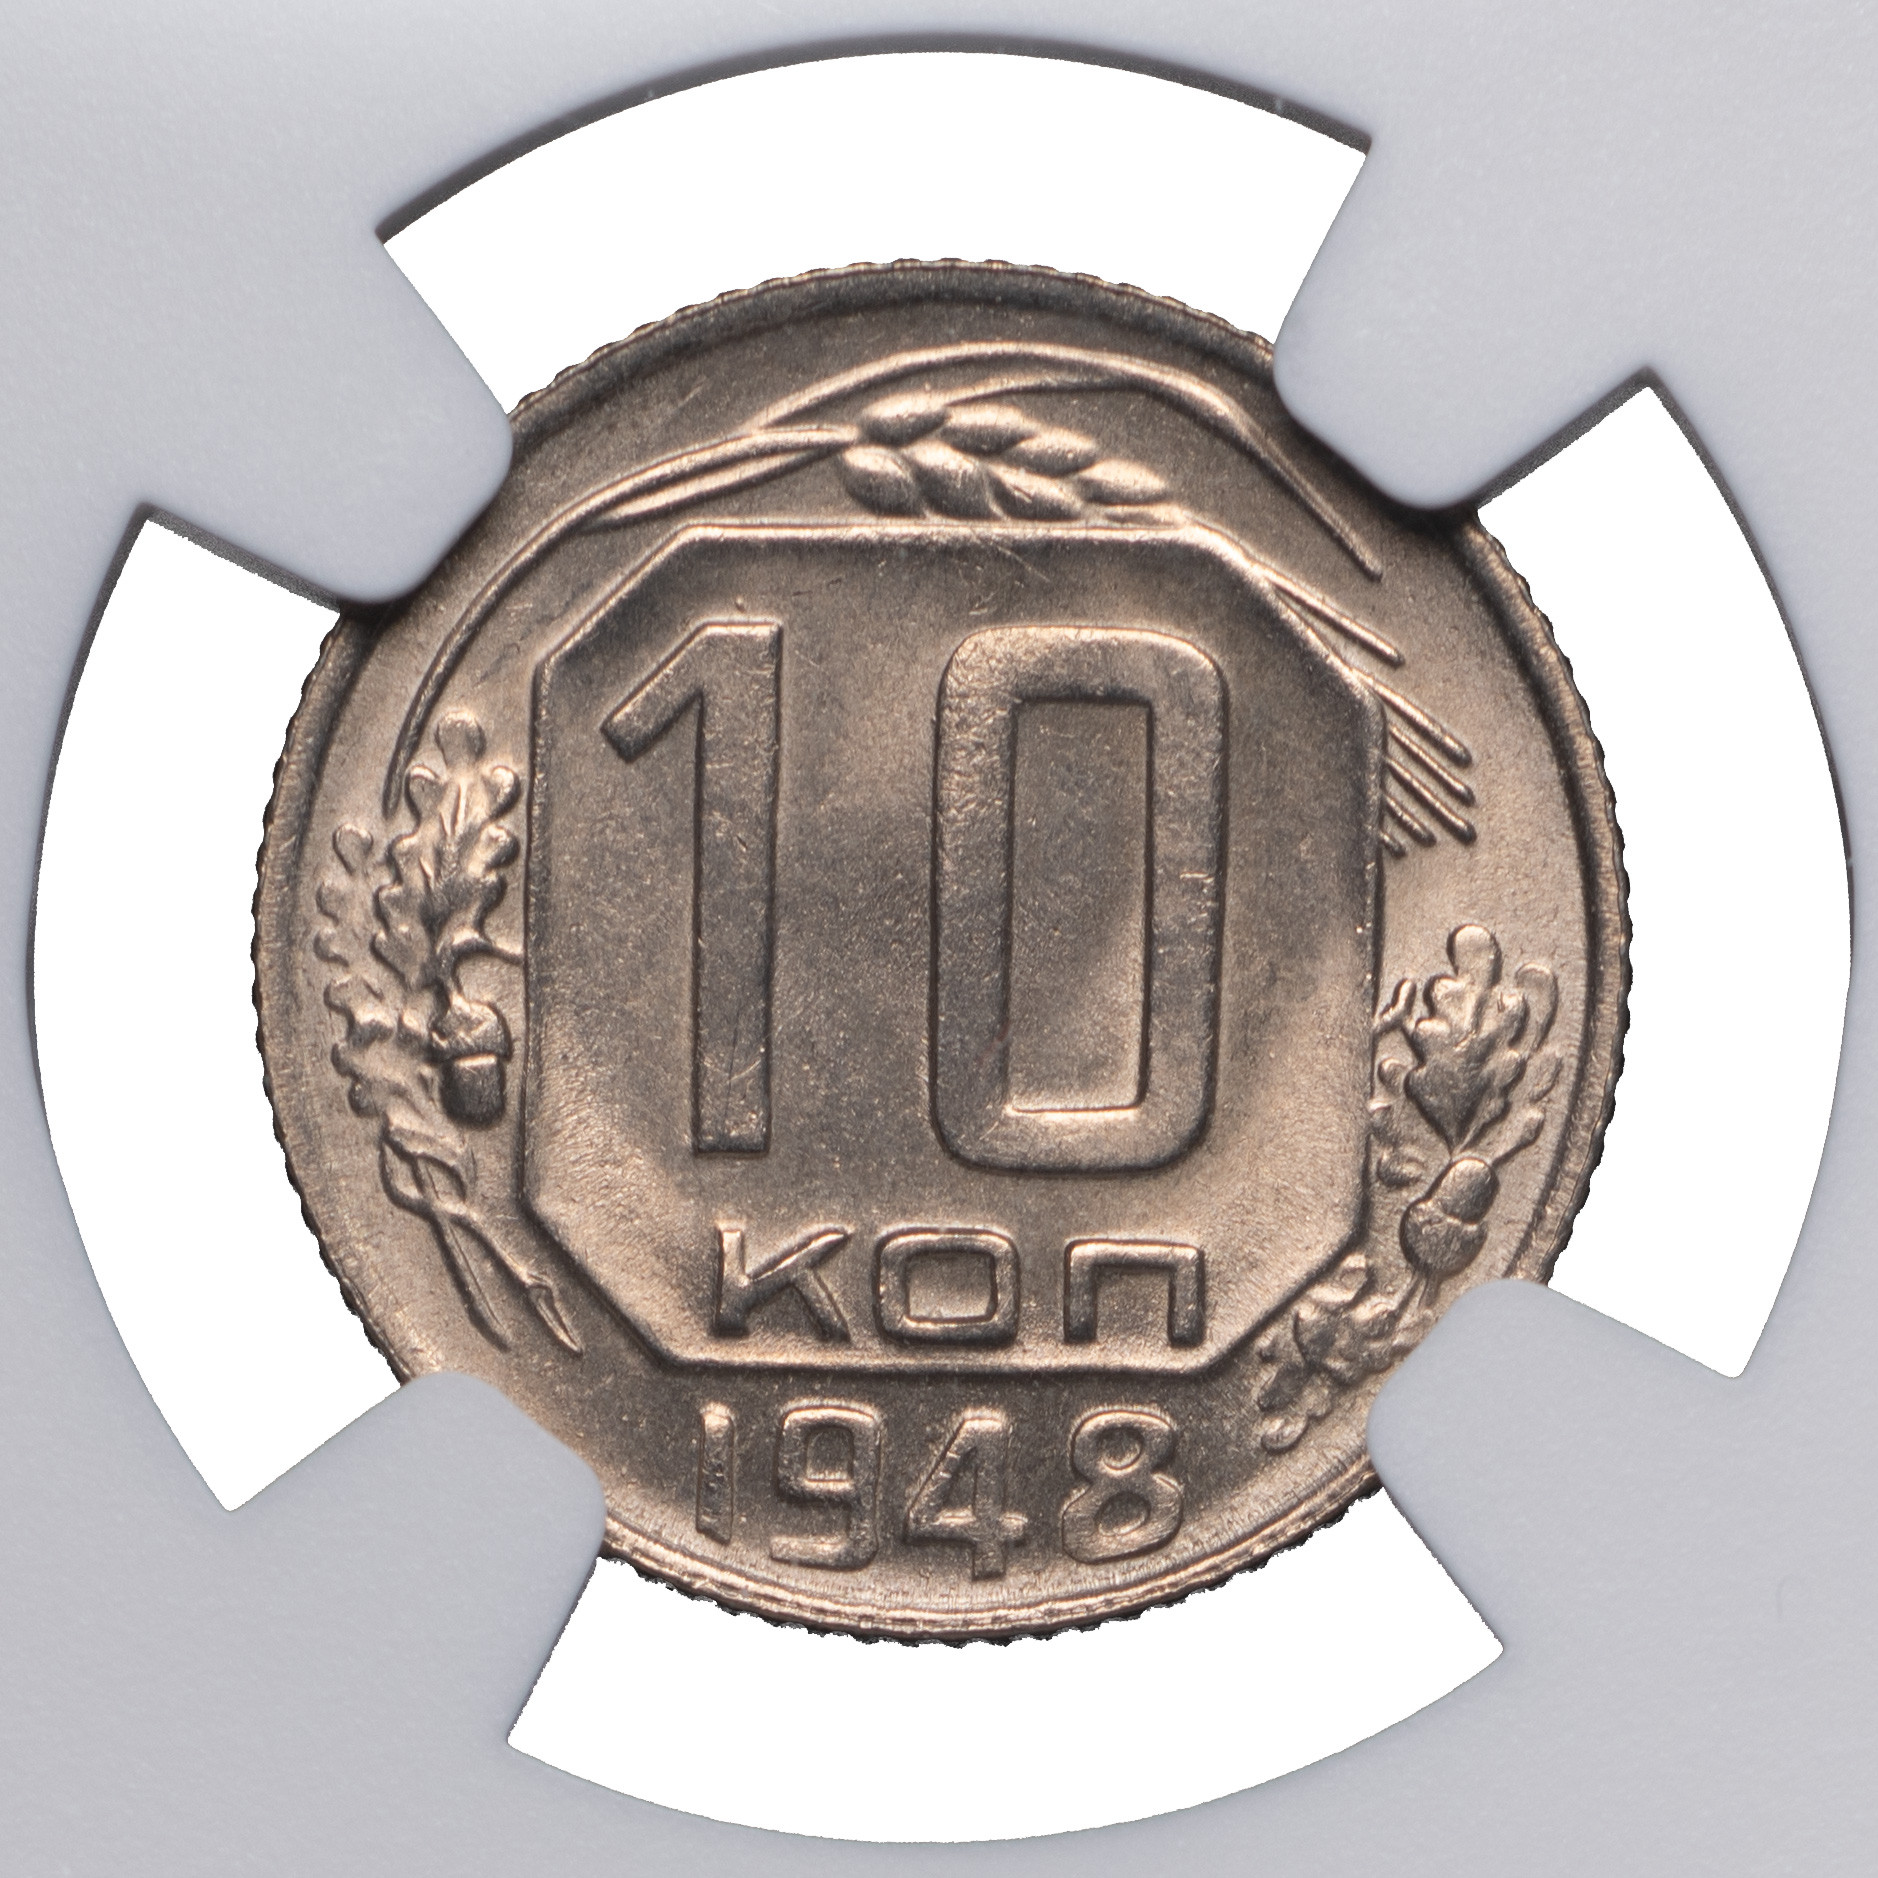 10 копеек 1948 года